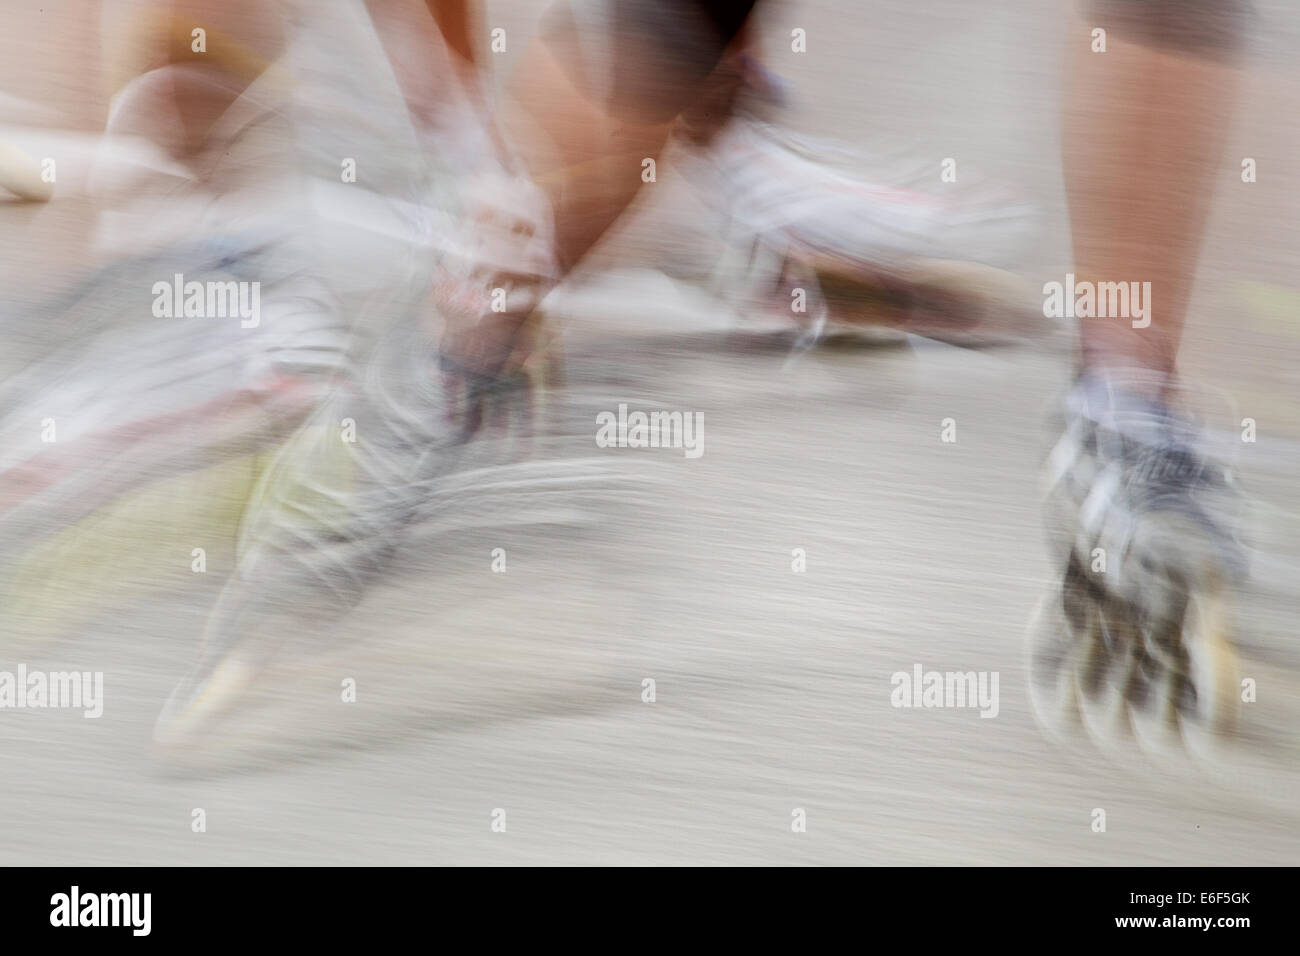 Speed skating race Stock Photo